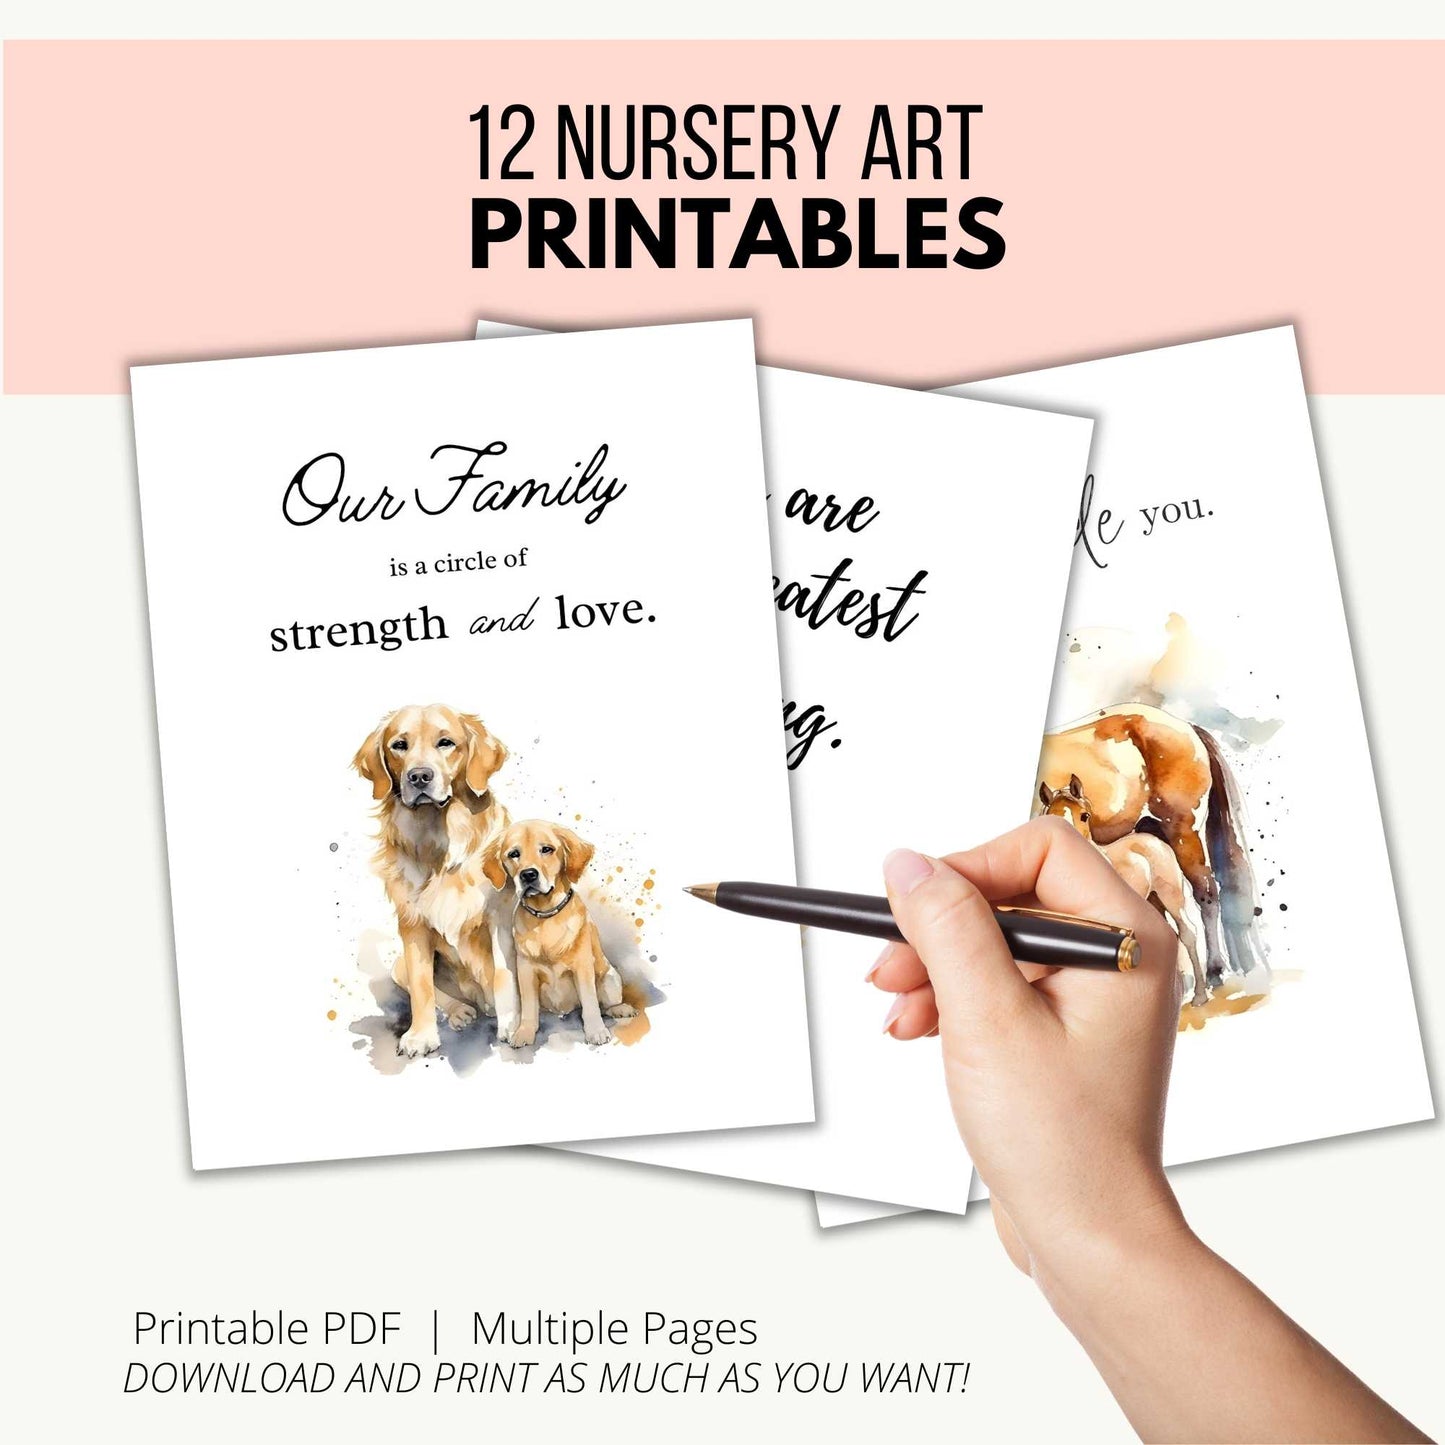 12 Nursery Art Printables